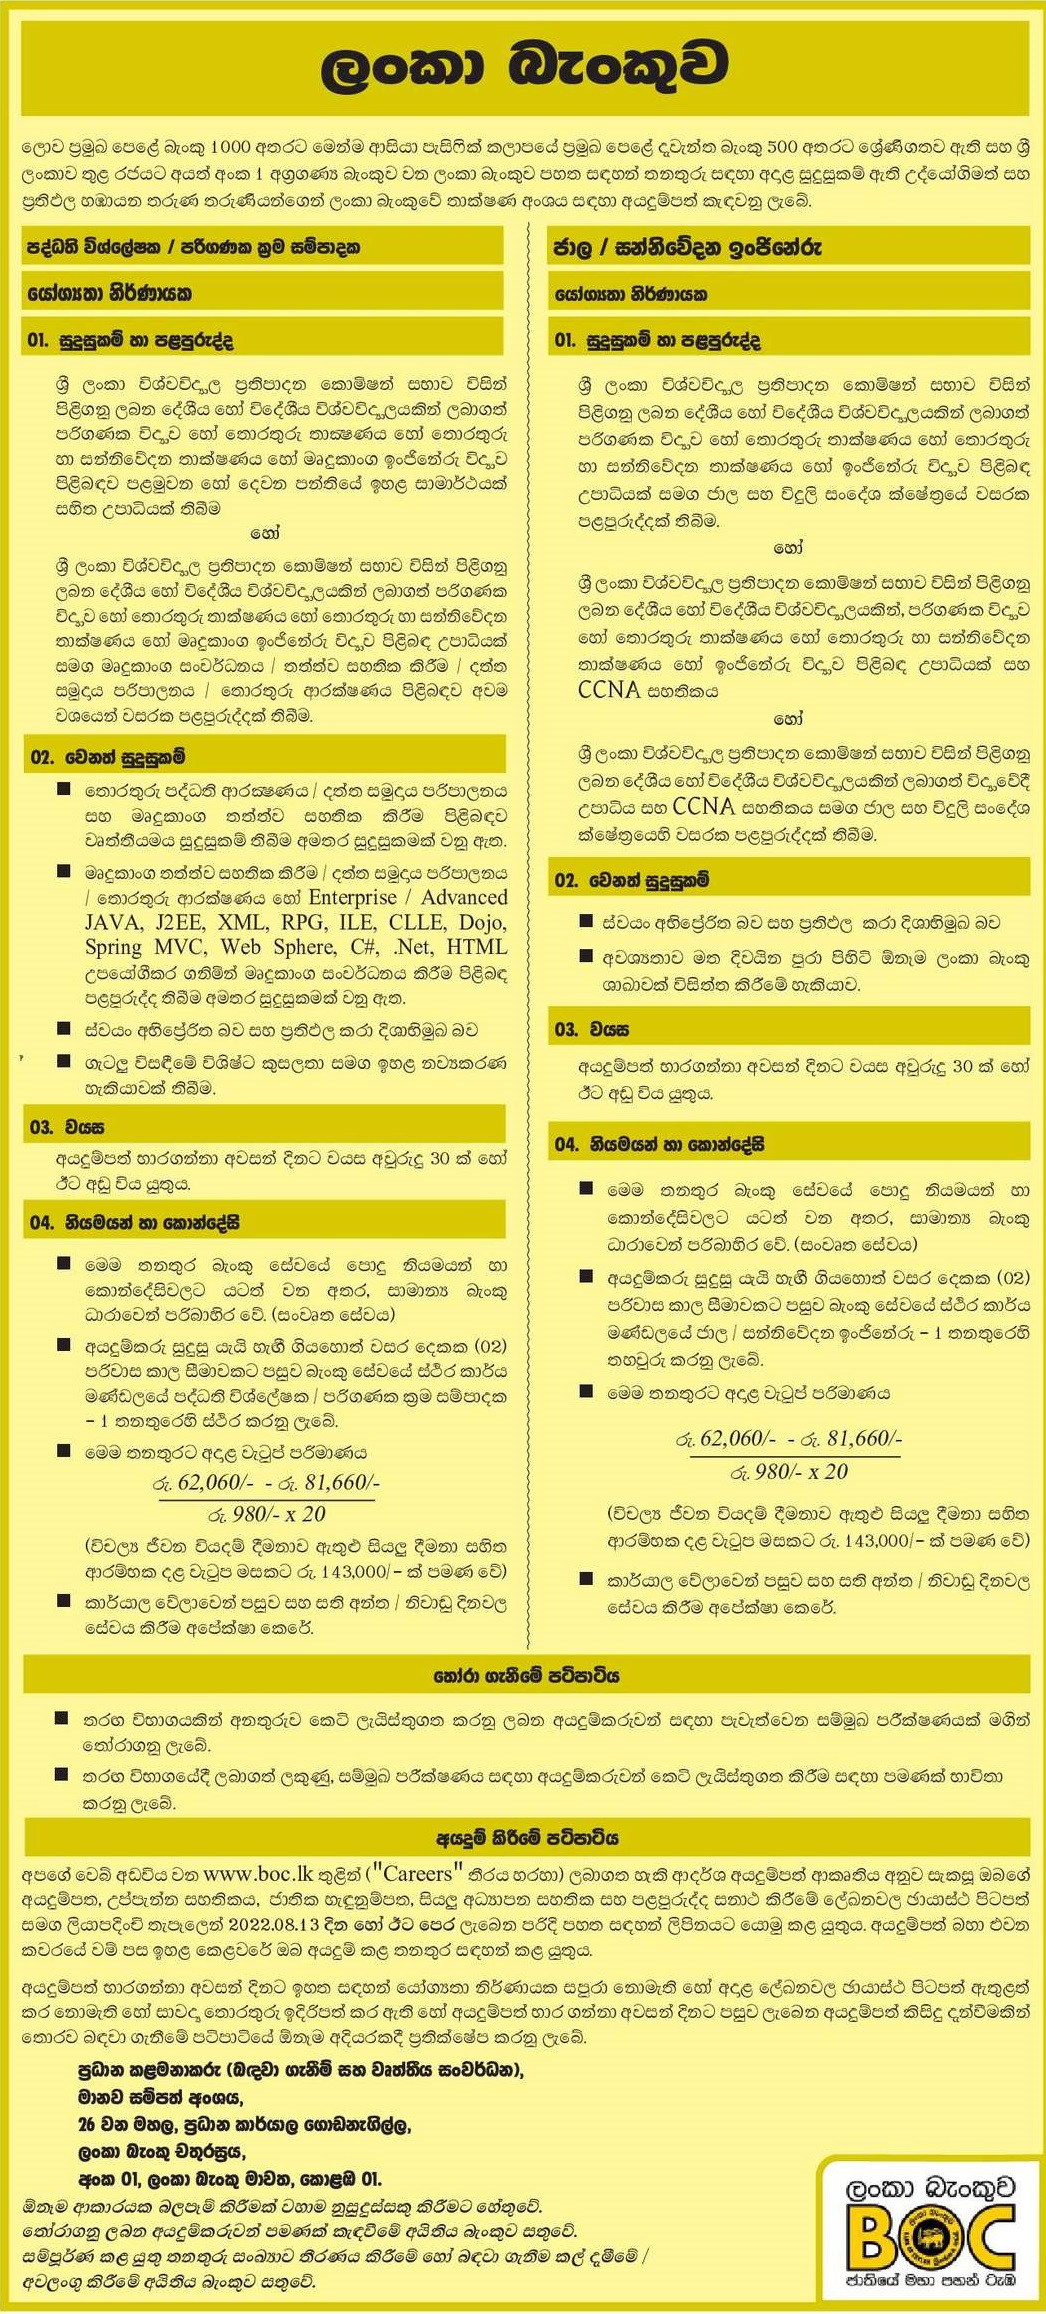 Systems Analyst -Computer Programmer,Network - Communication Engineer - Bank of Ceylon